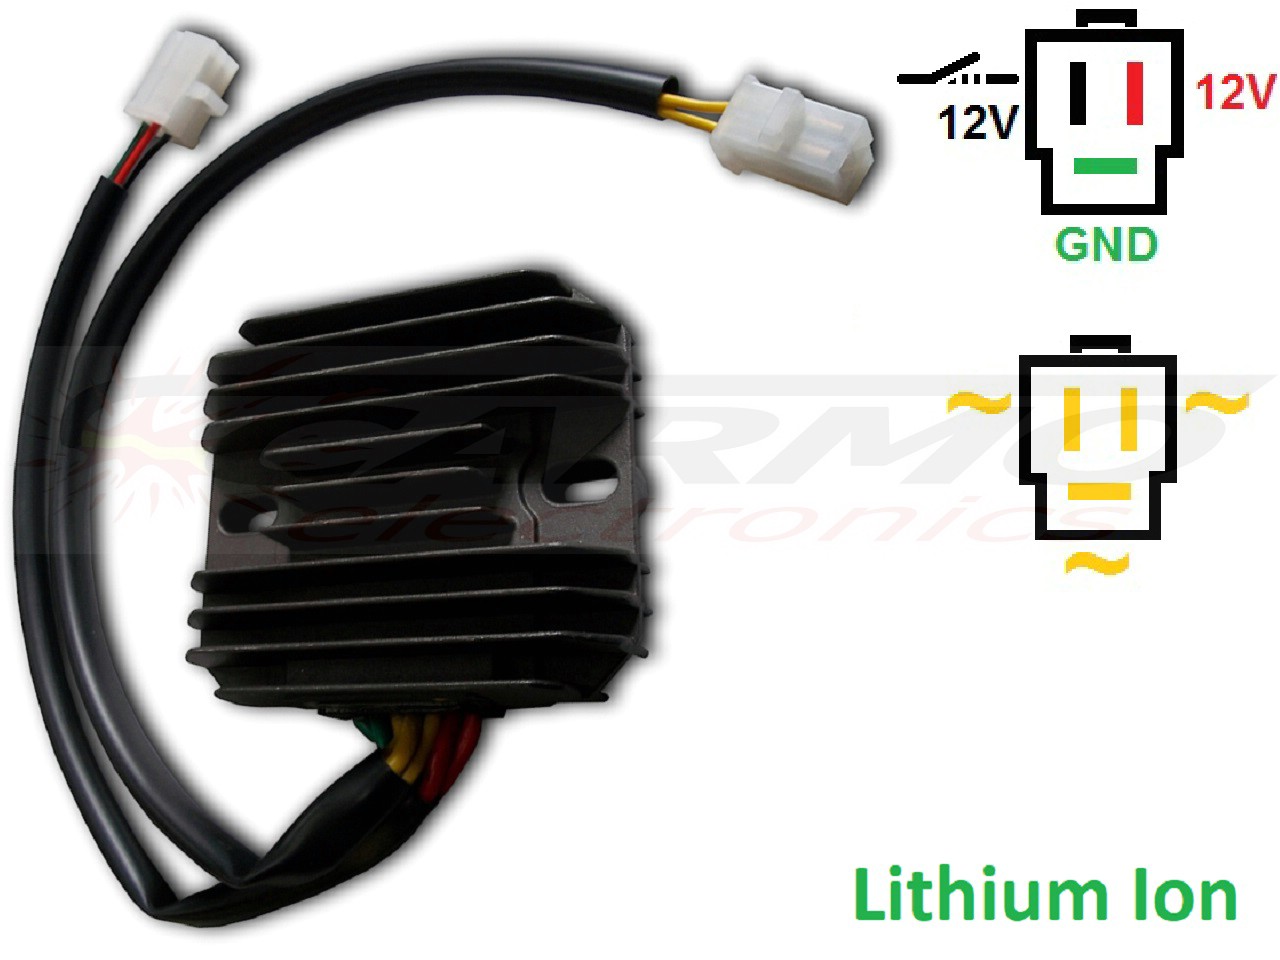 CARR164-LI - CX500 MOSFET Voltage regulator rectifier (31600-415-008, SH232-12, Shindengen) - Lithium Ion - Clique na Imagem para Fechar